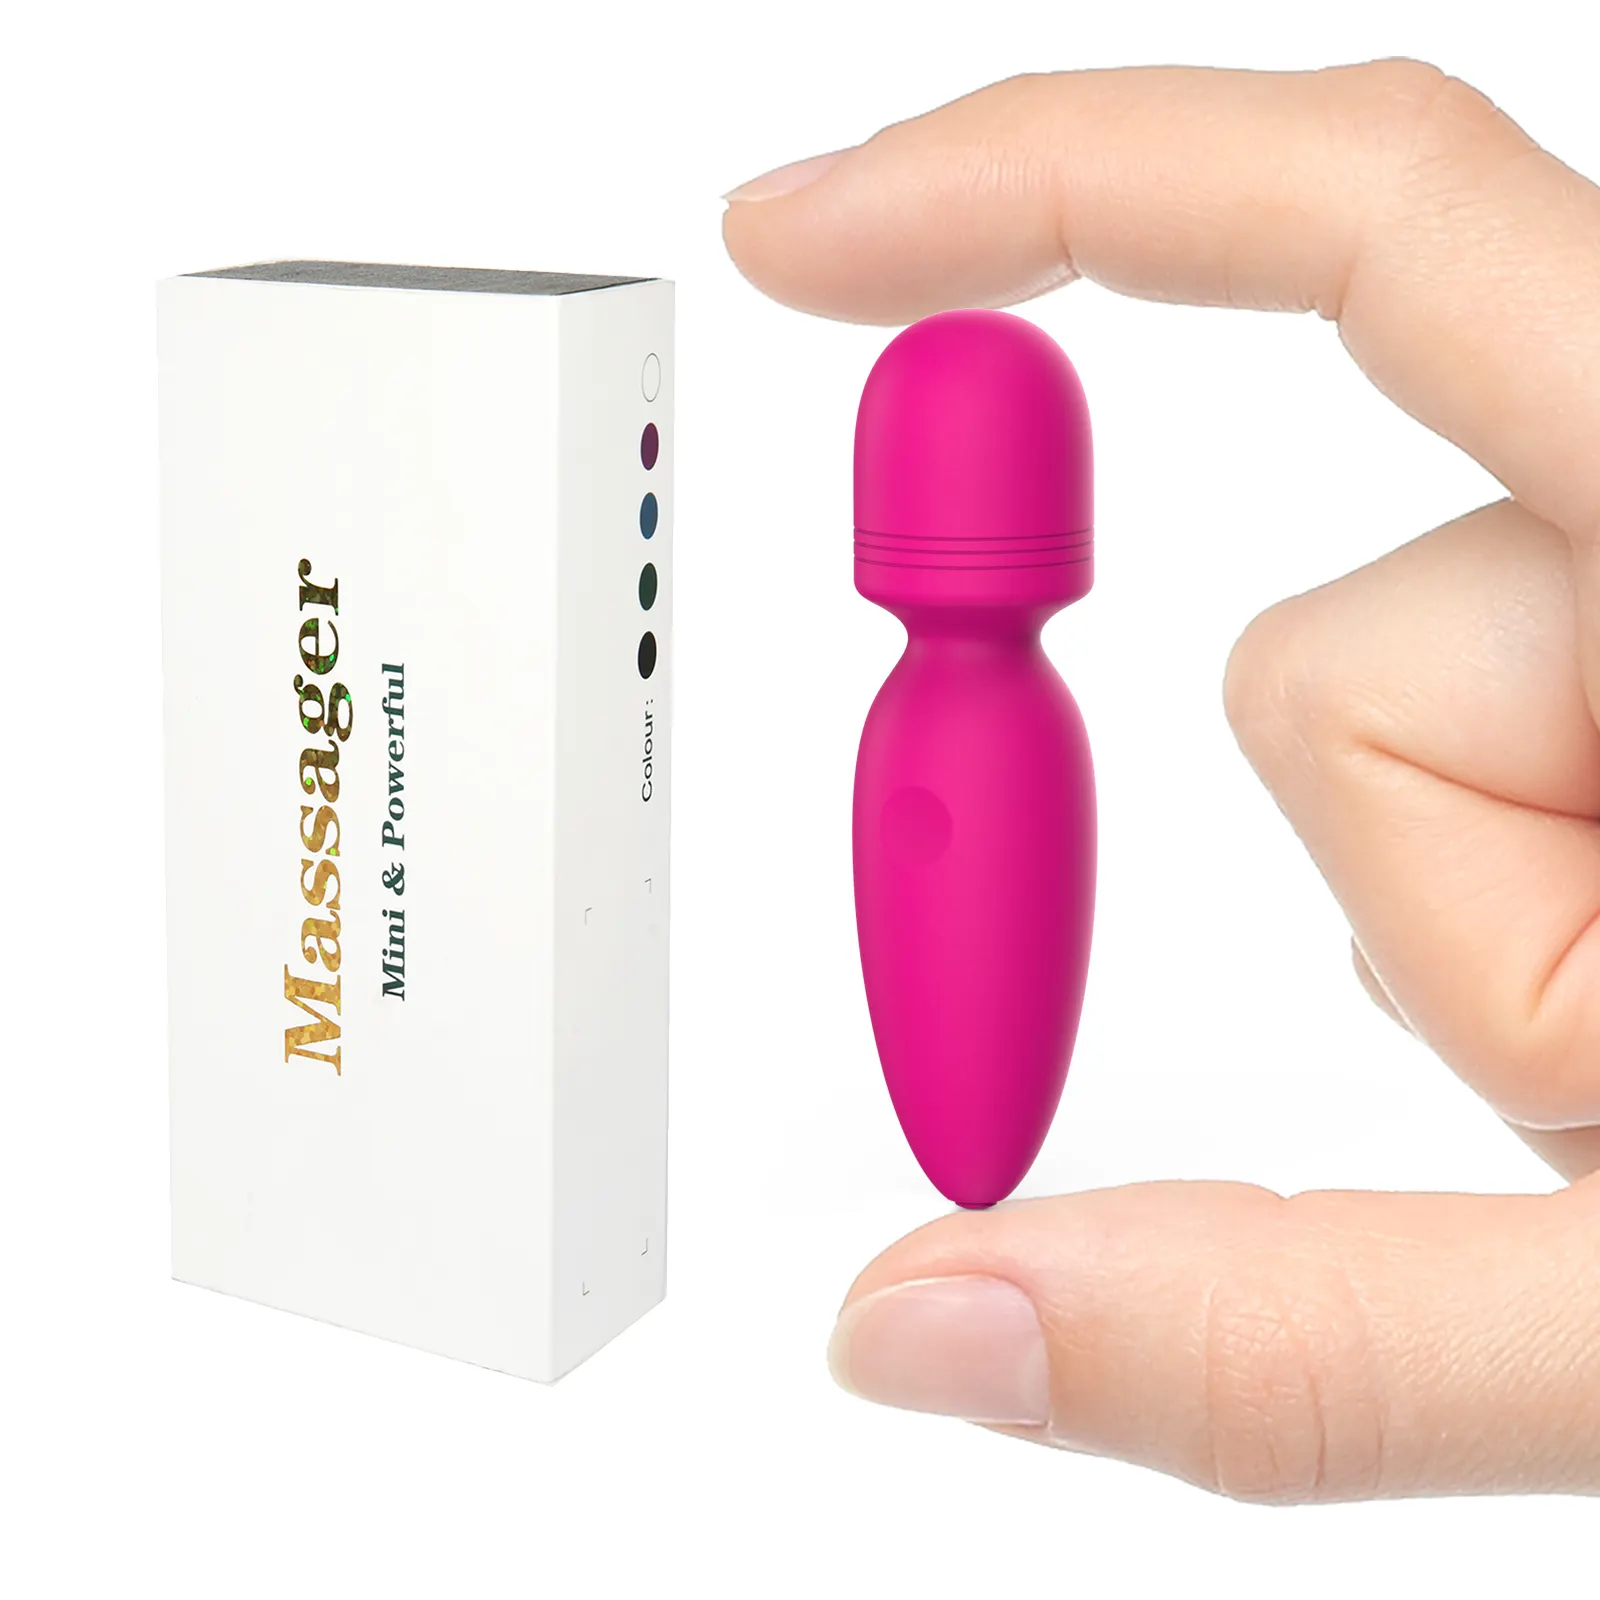 10 Vibración Portátil Mini Bullet Vibrador Mujer Vagina Estimulación Vibradores Productos Sexuales Mujeres AV Varita Masajeador